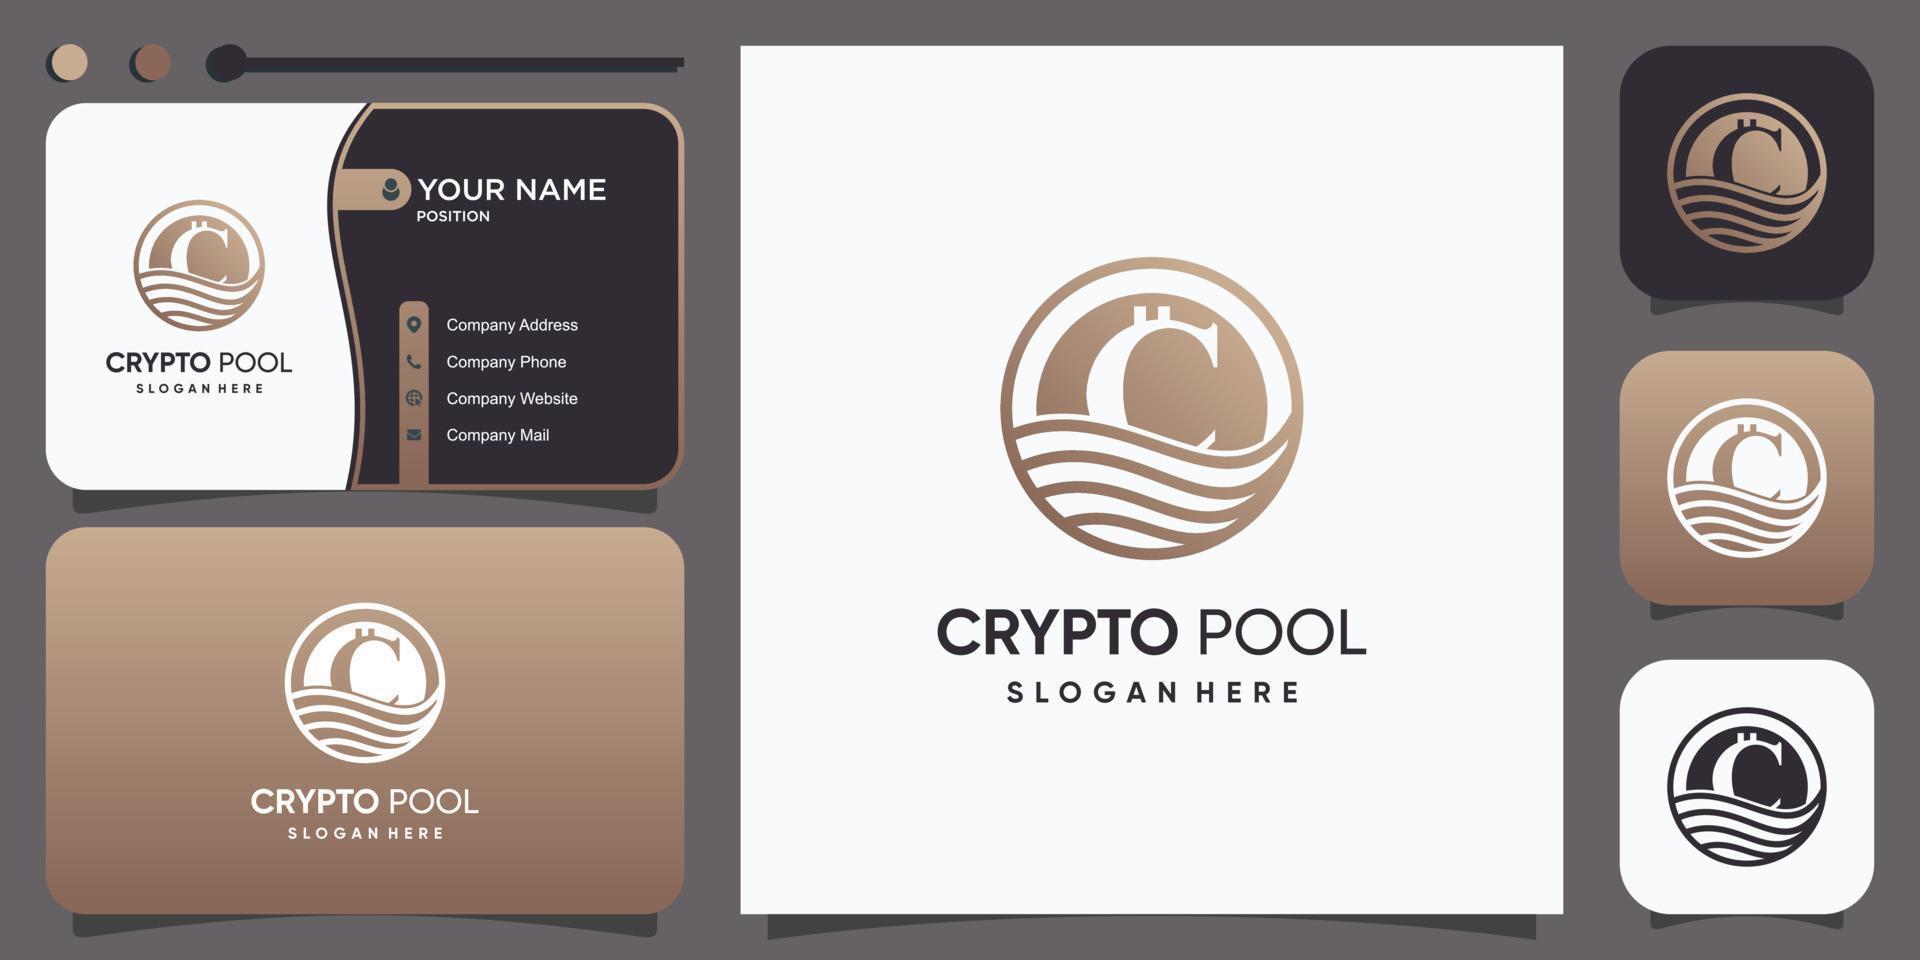 Crypto pool logo design with creative modern style idea vector